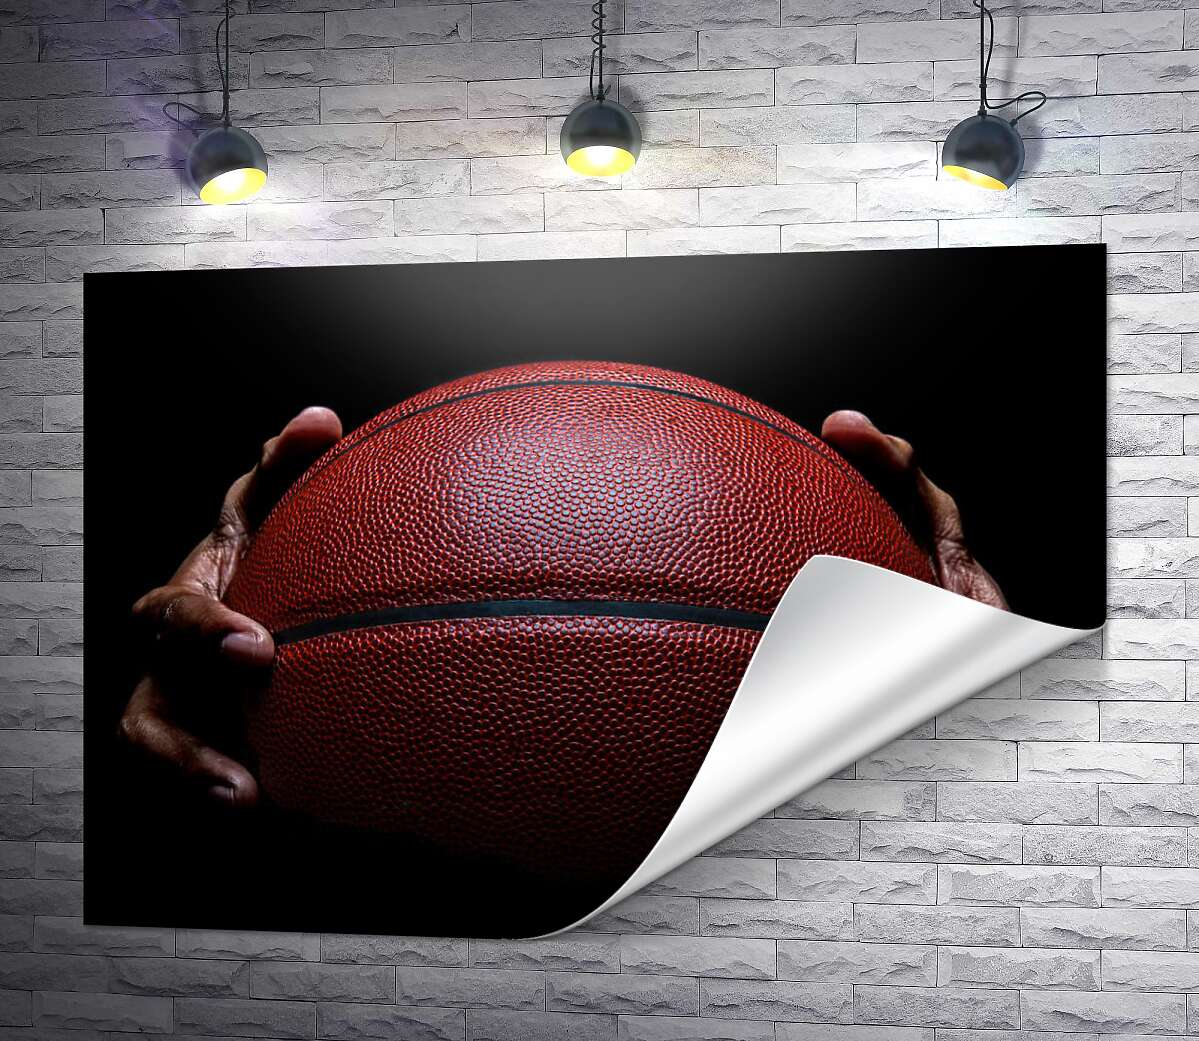 друк Баскетбольний м'яч у руках спортсмена